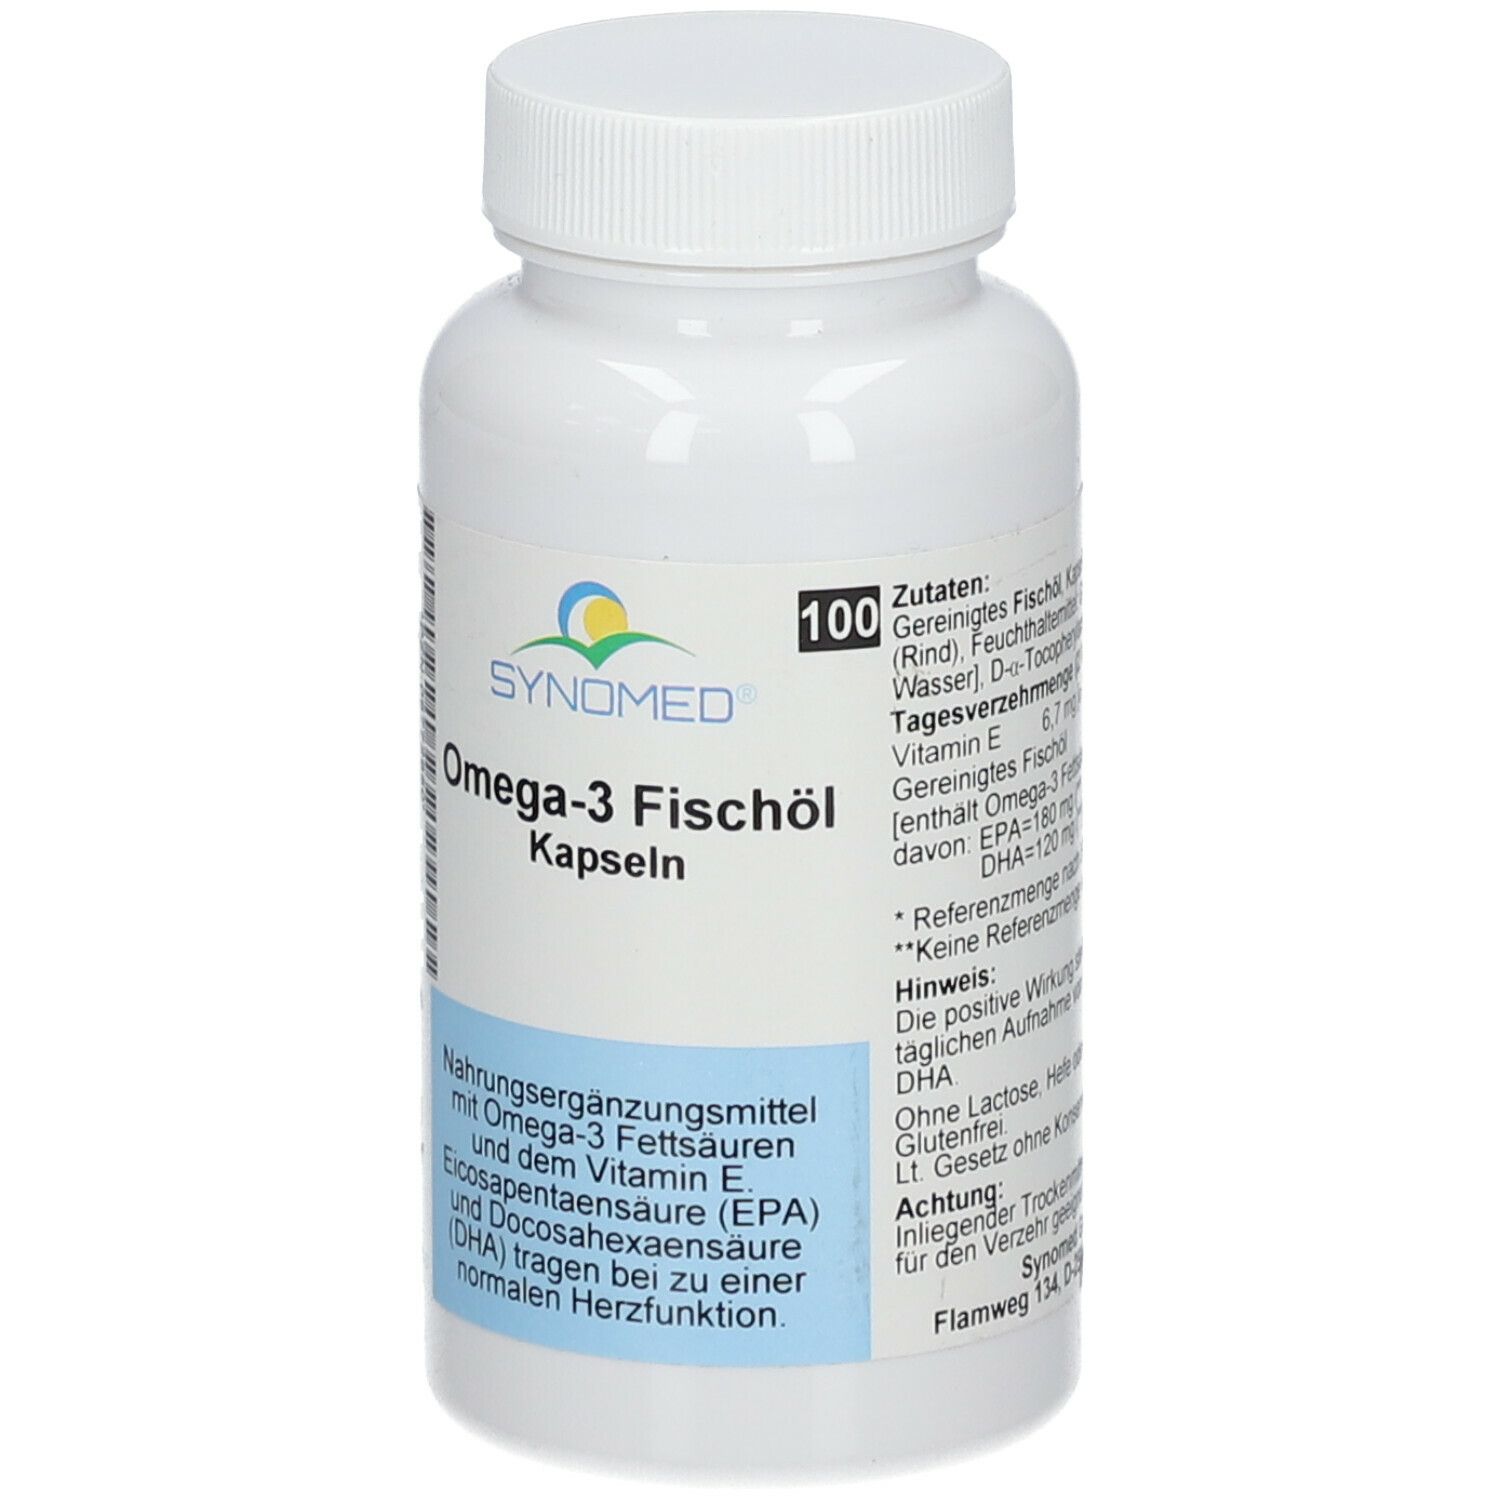 SYNOMED Omega-3 Fischöl